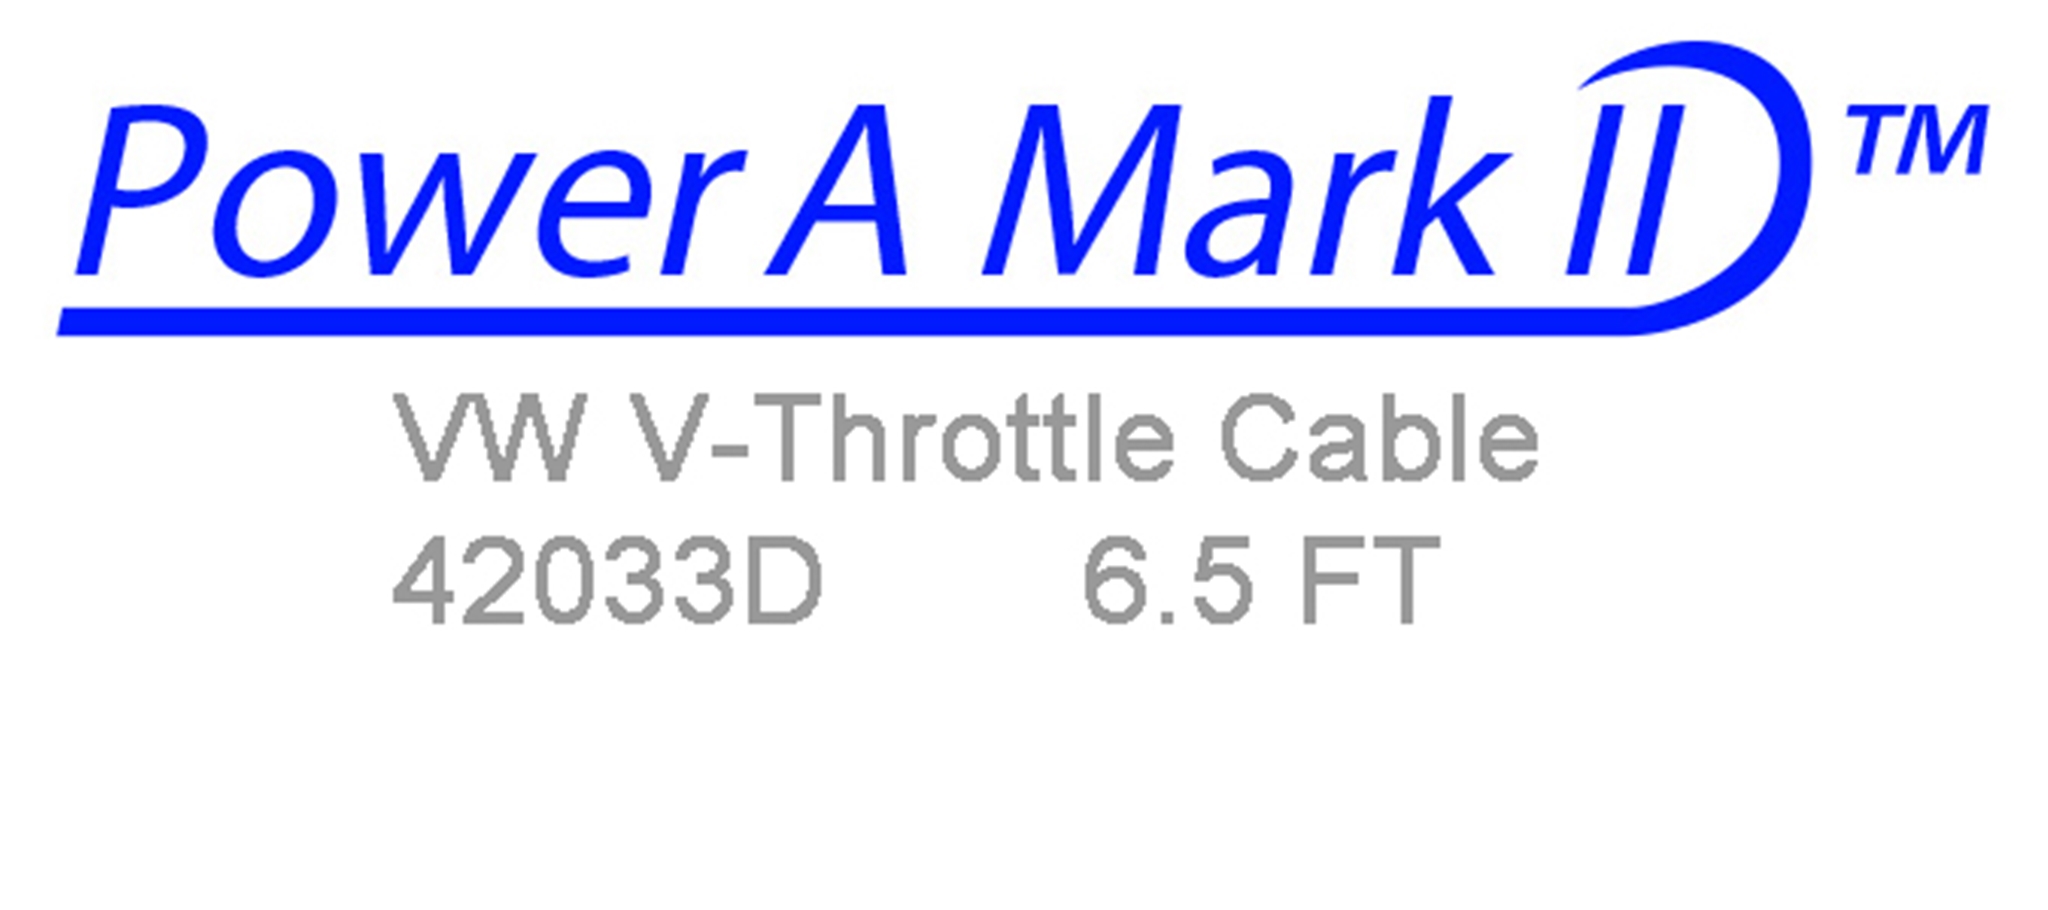 42033D VW V-Throttle Cable 6.5 Ft Length